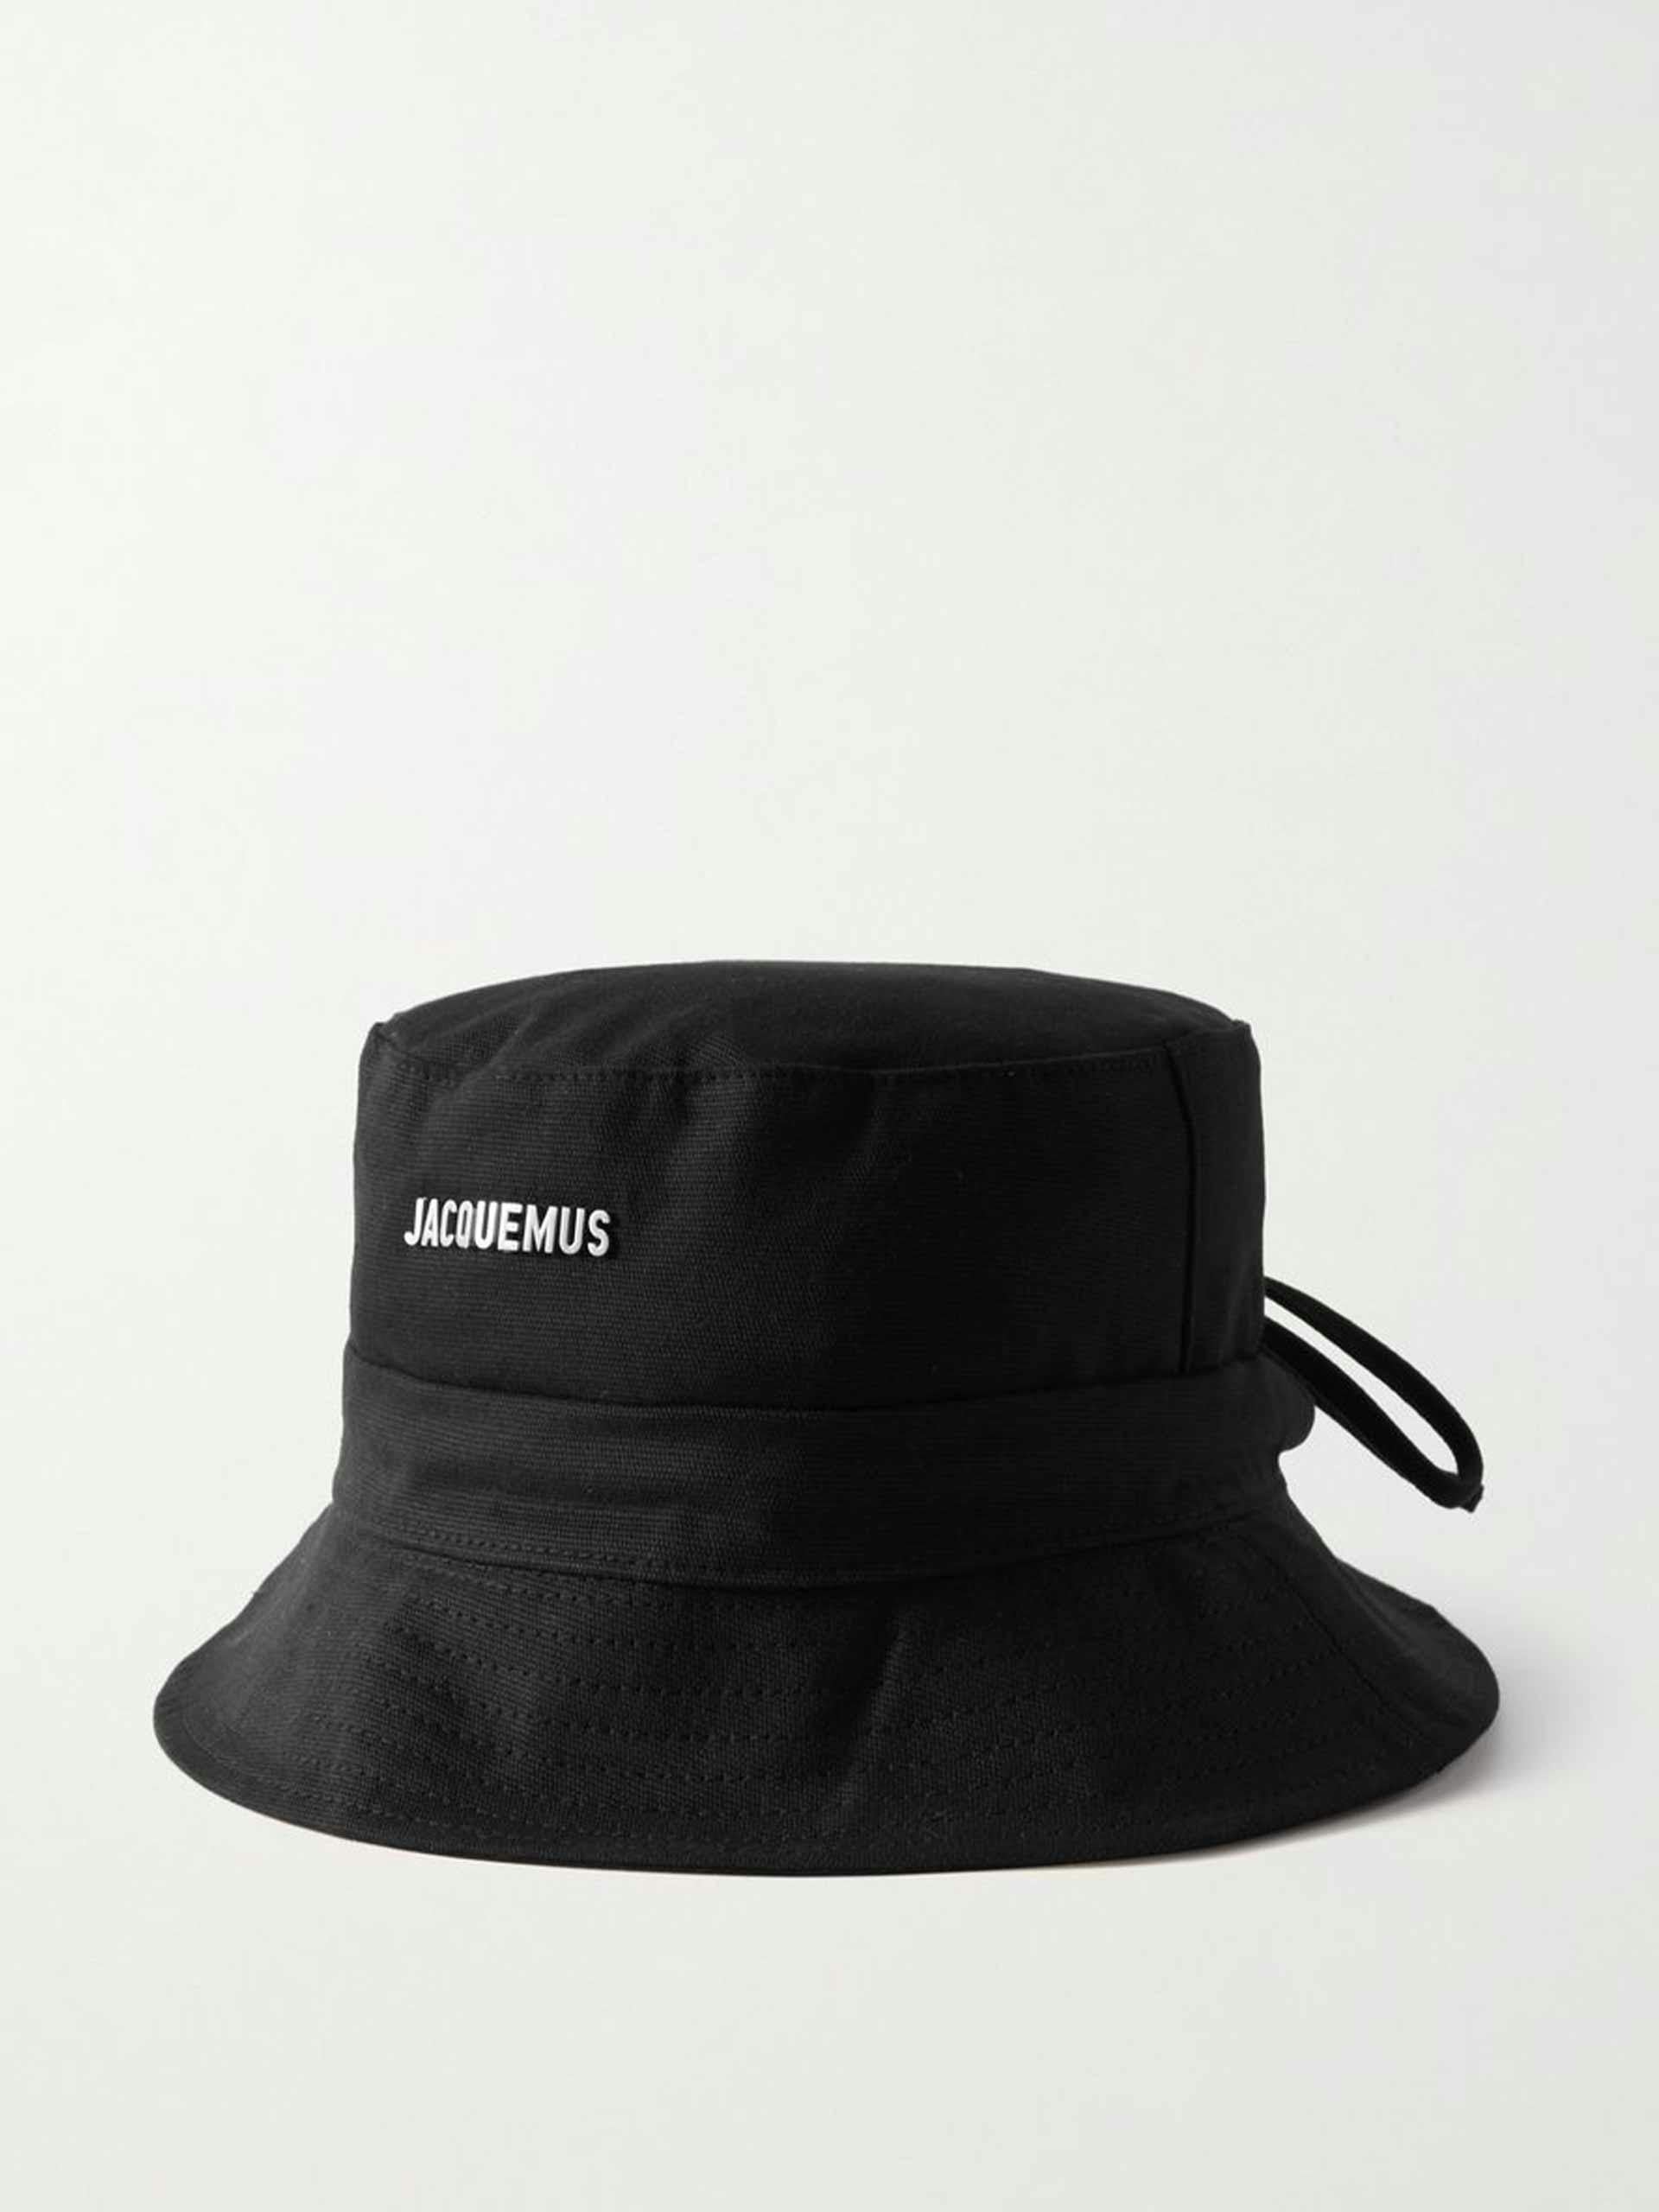 Black bucket hat with logo